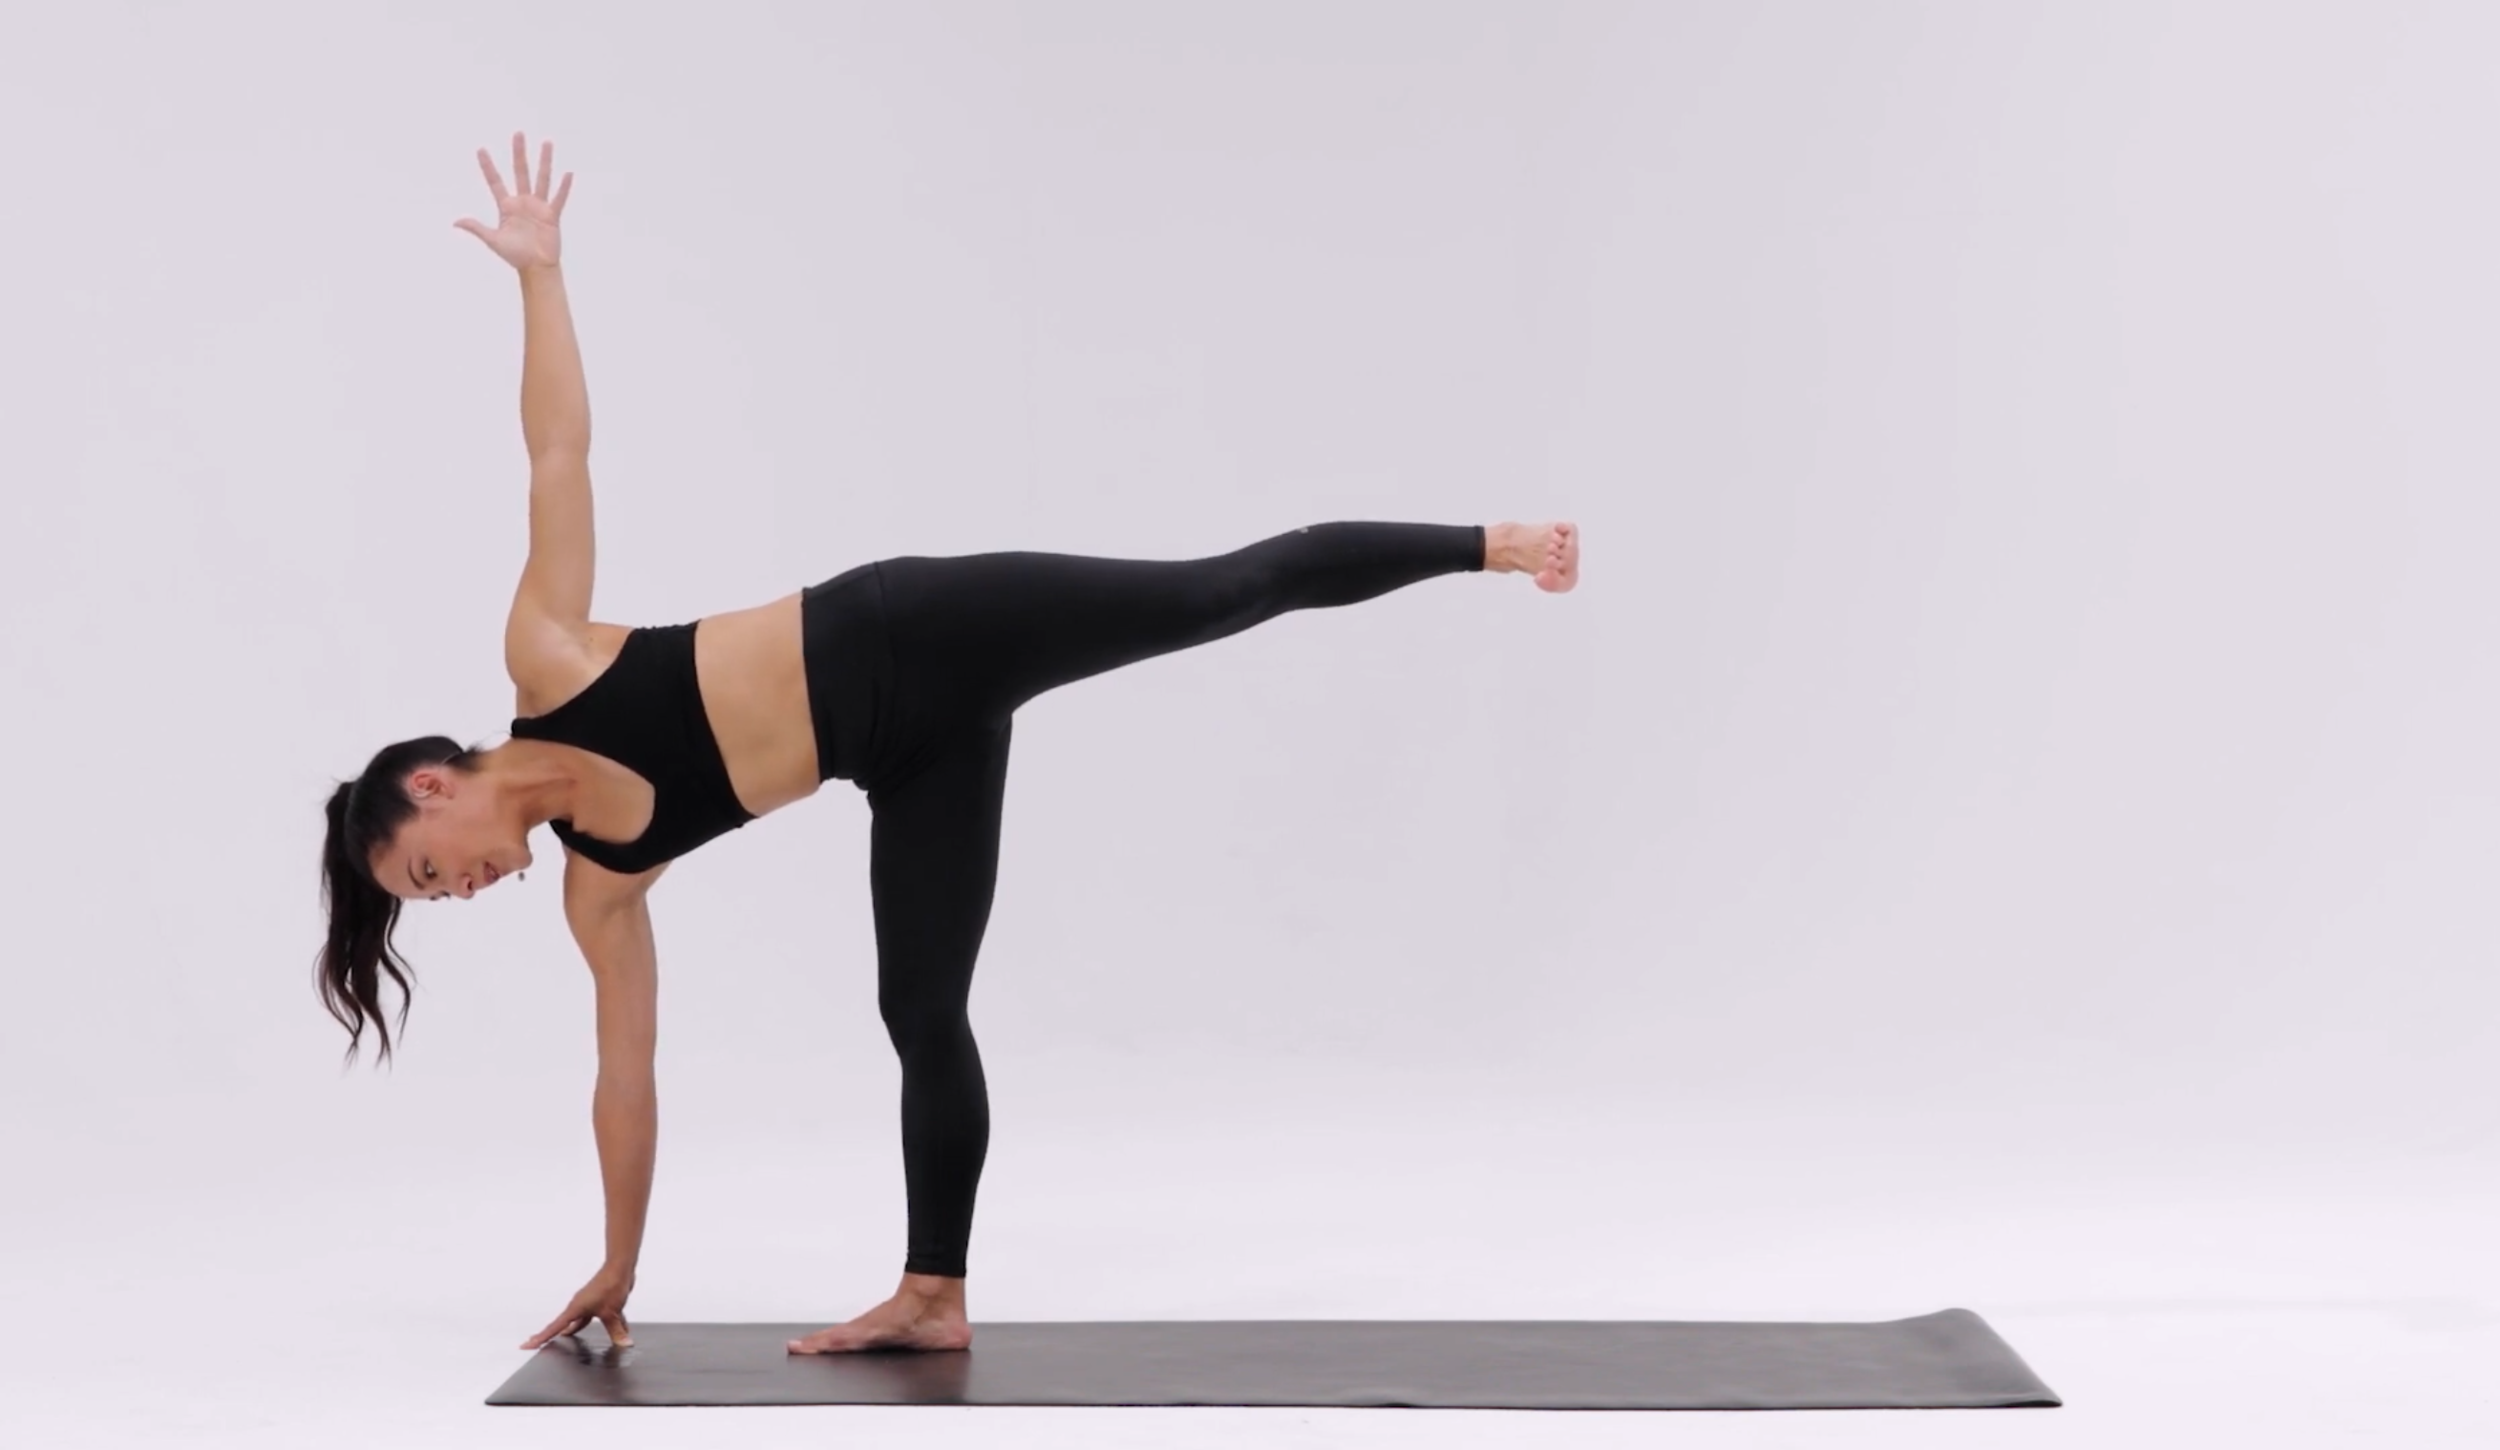 Half Moon Yoga Pose for Strengthening the Legs and Core | Half moon yoga  pose, Yoga poses, Poses